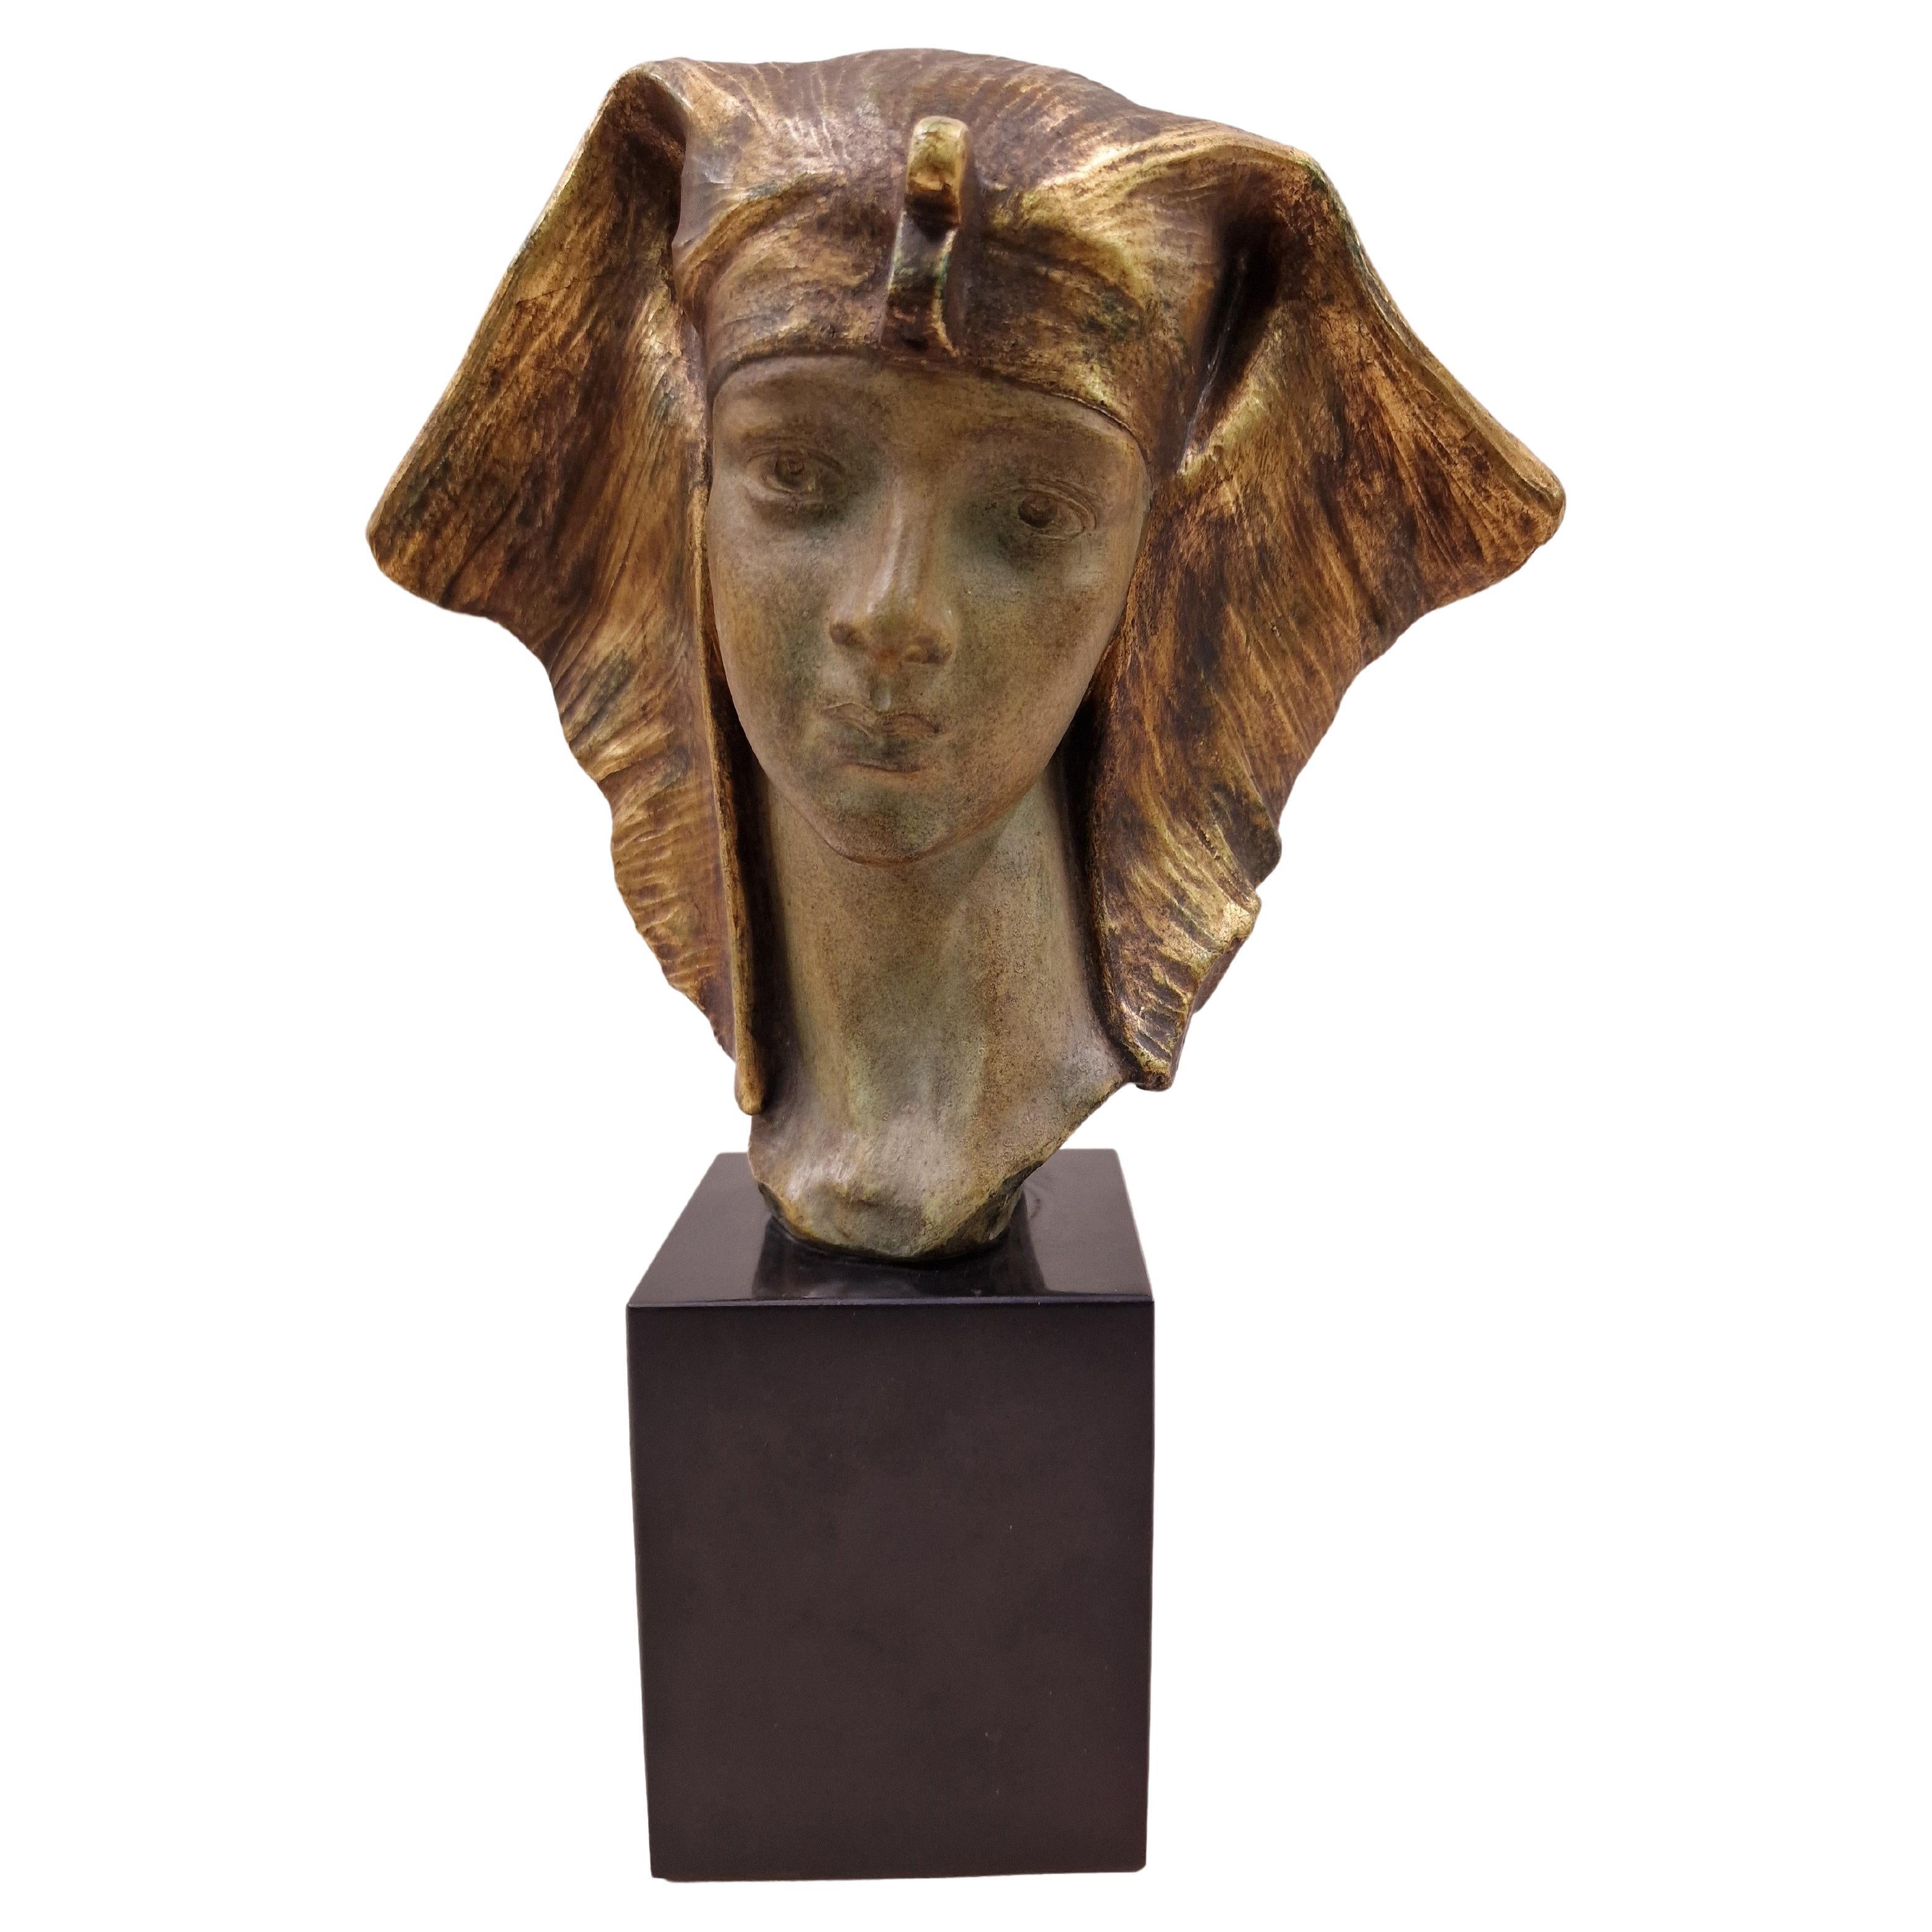 Cleopatra bust, sculpture, C. Carli, circa 1920, Art Deco, Belgium